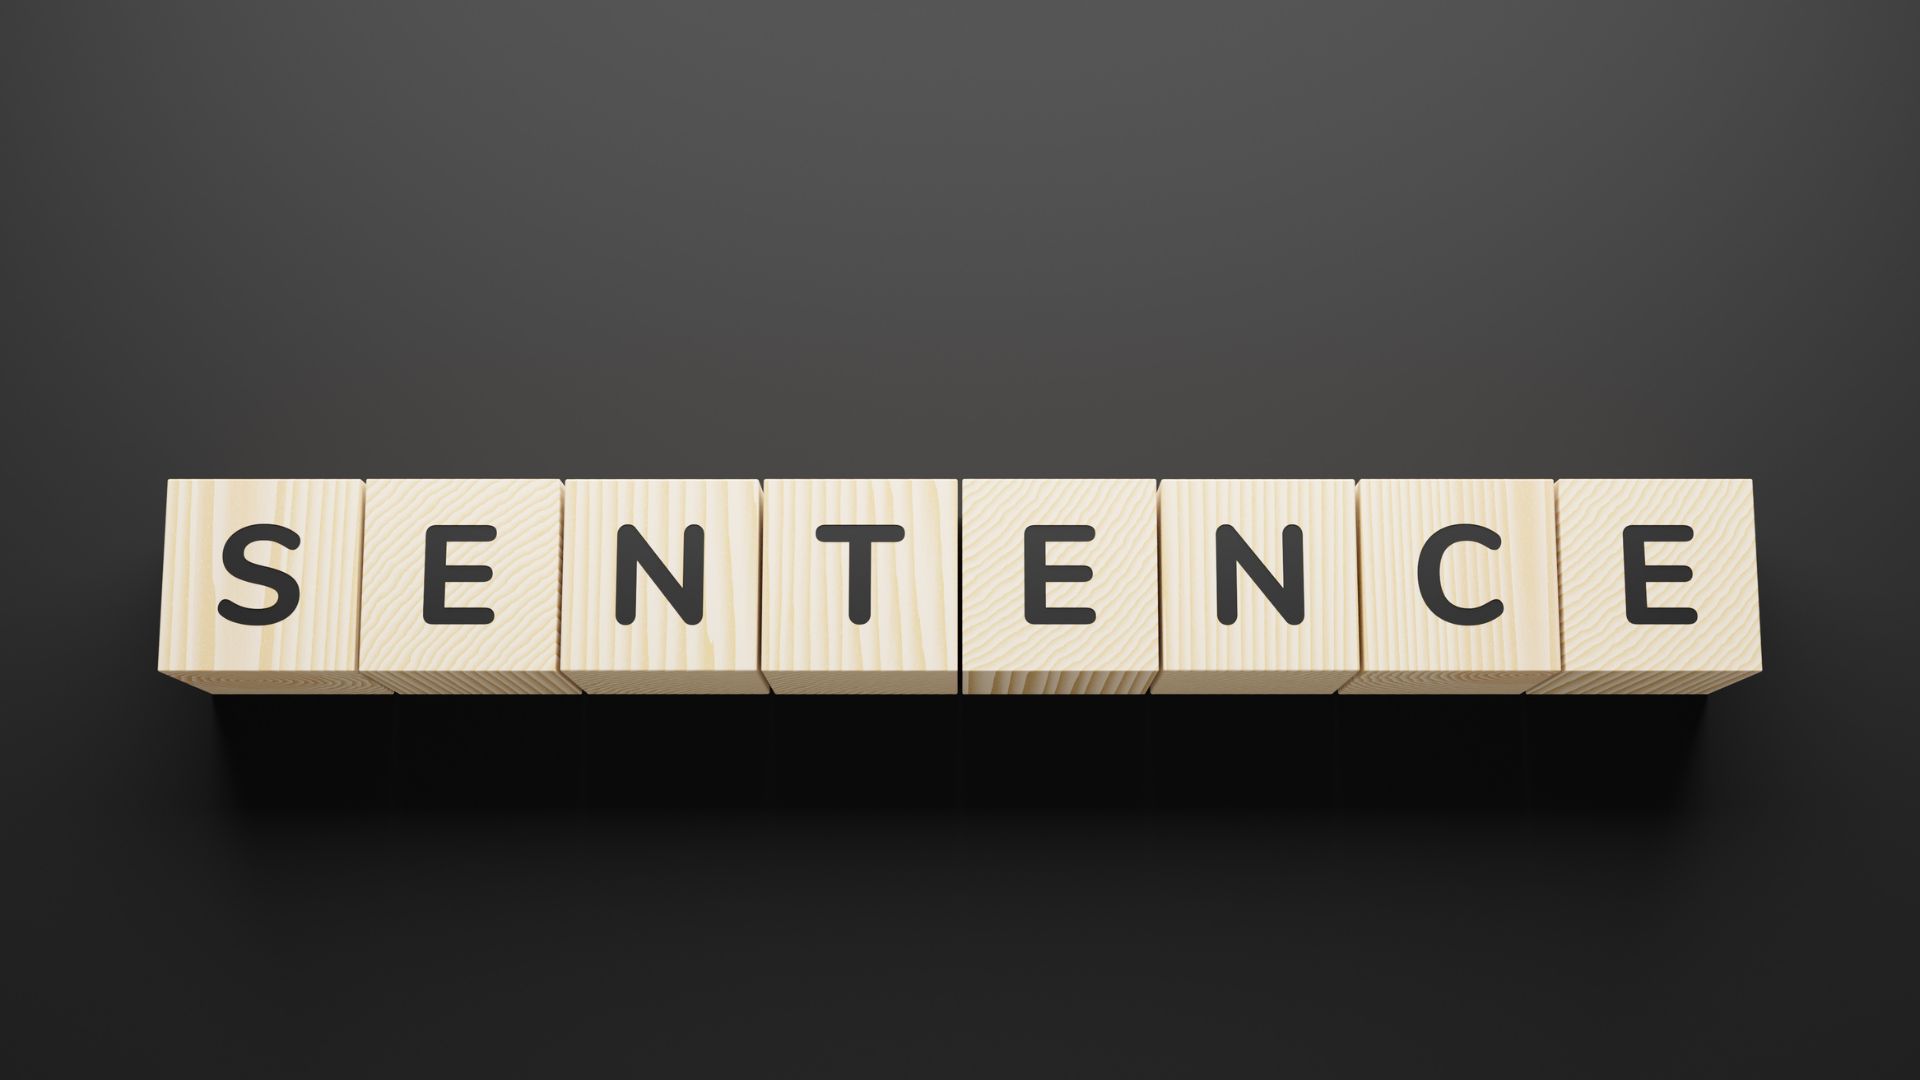 Sentence Structure Quiz